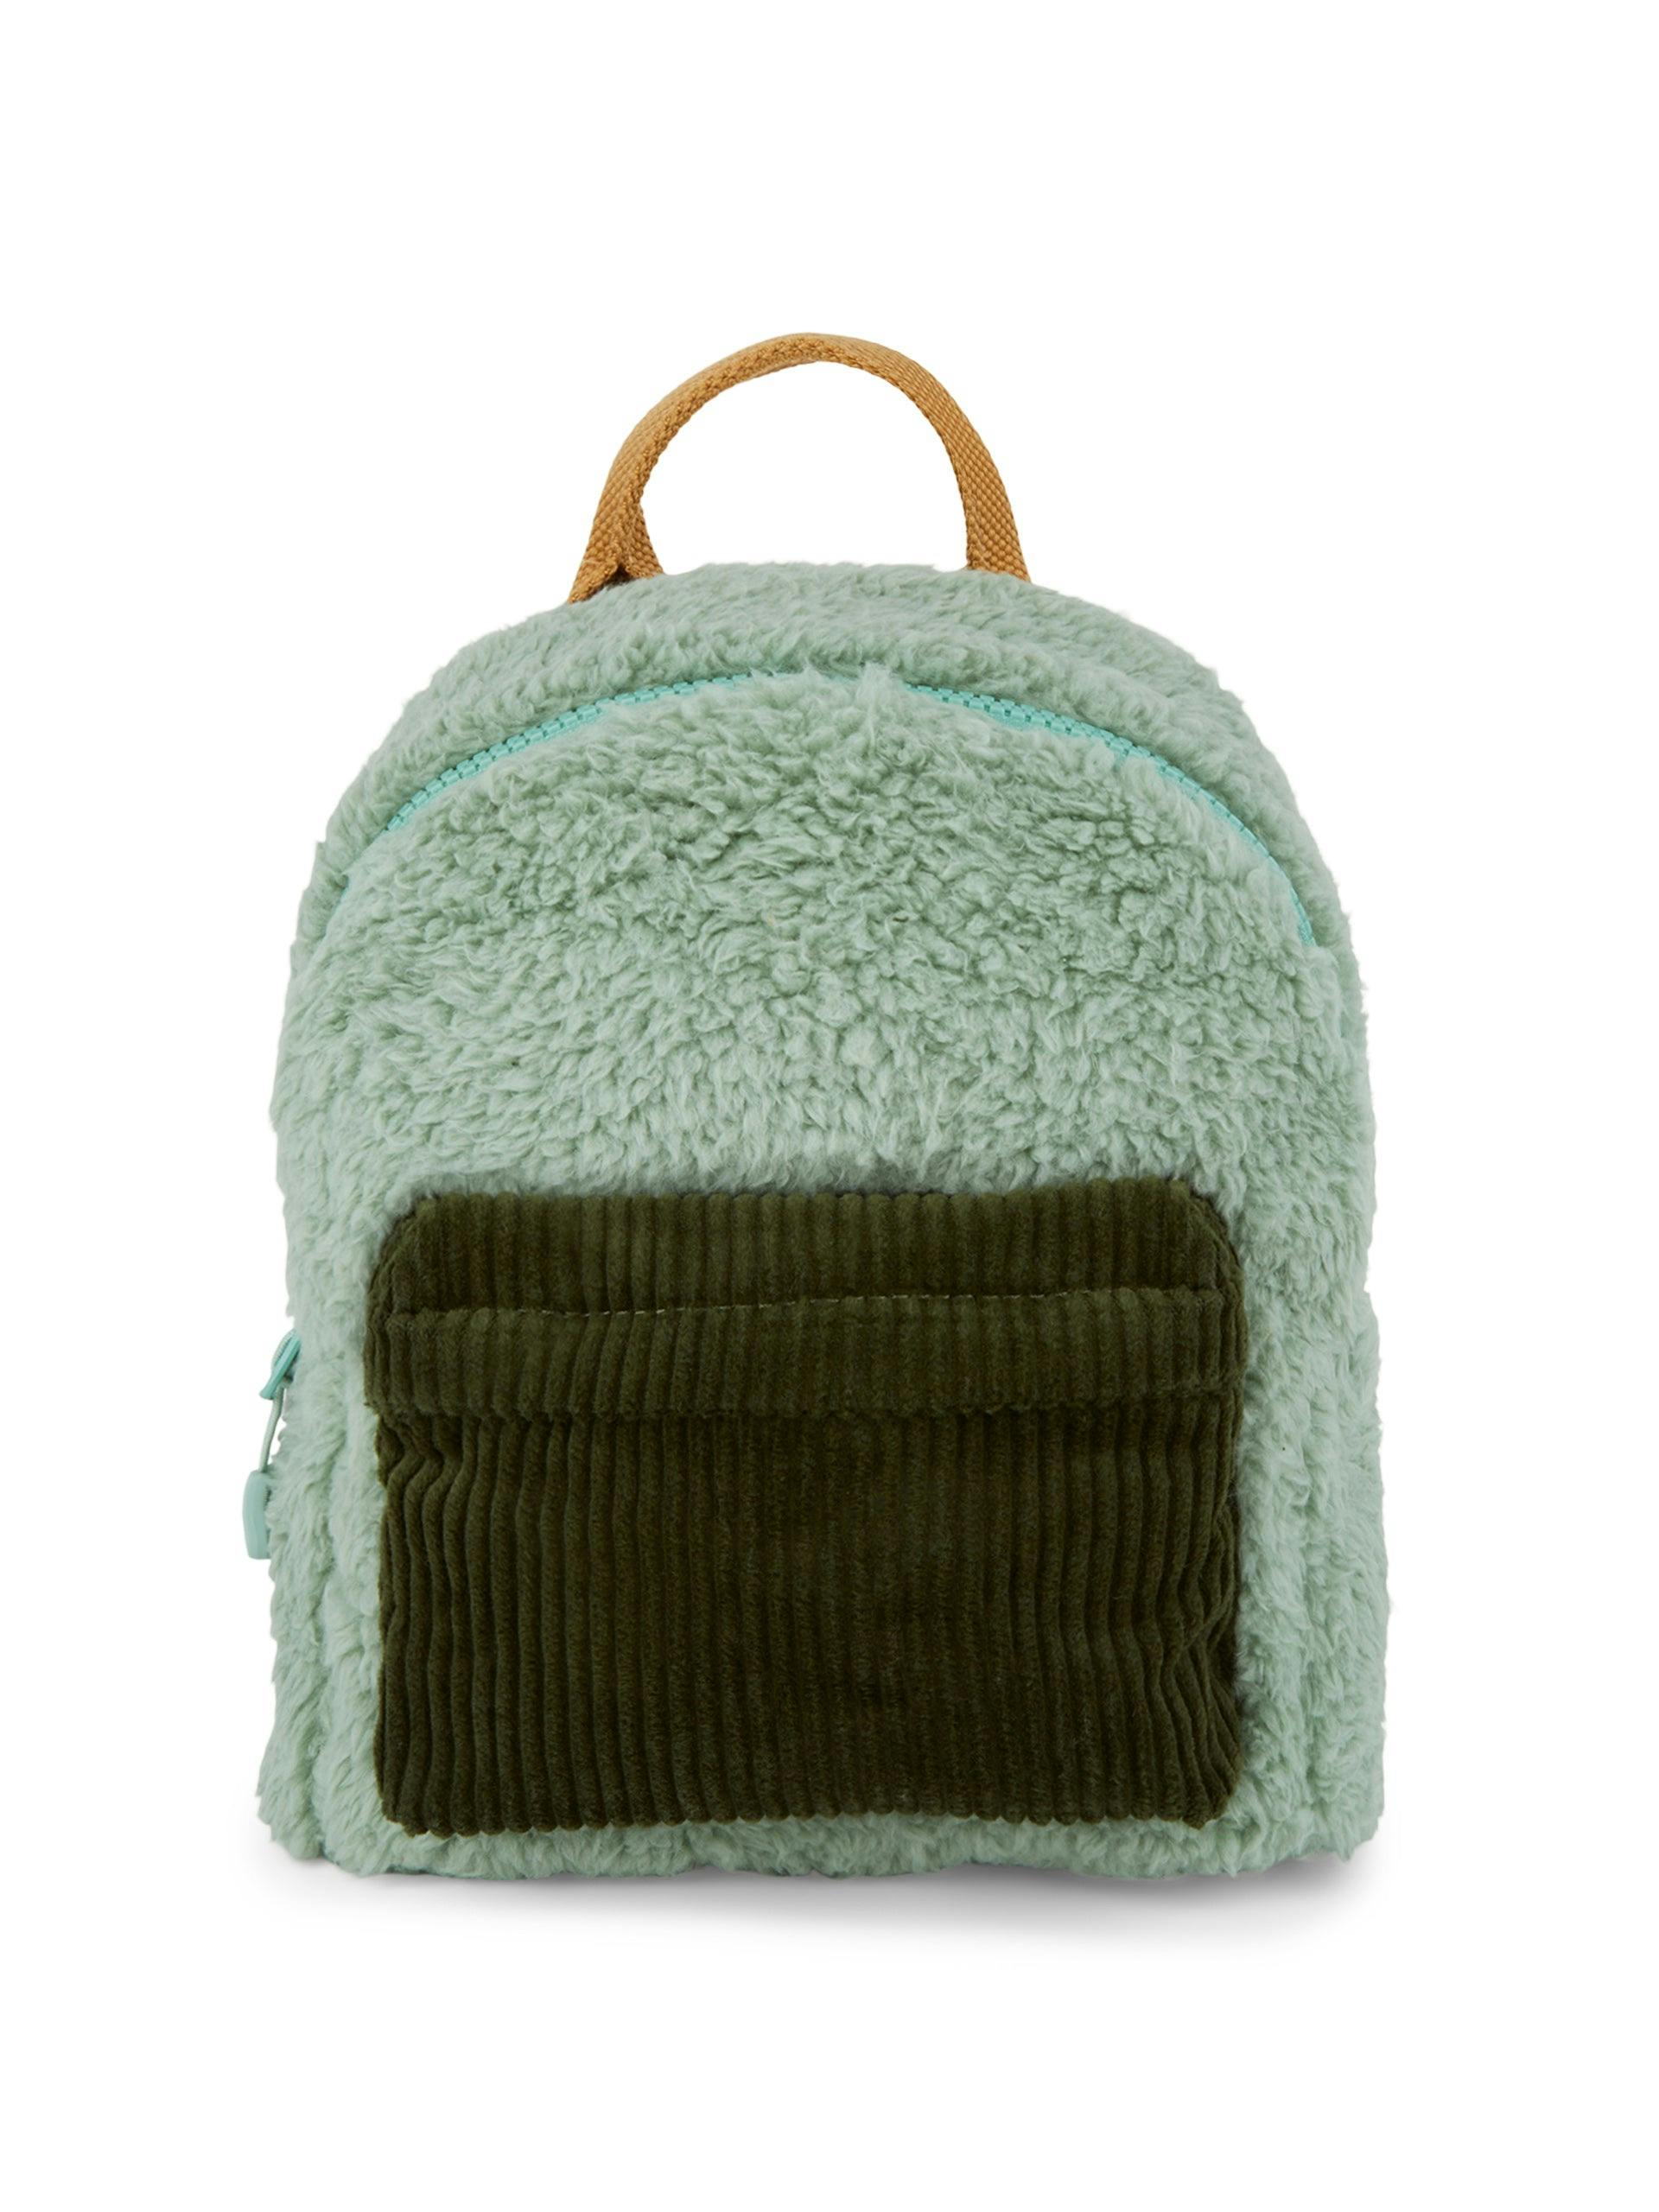 Green teddy backpack